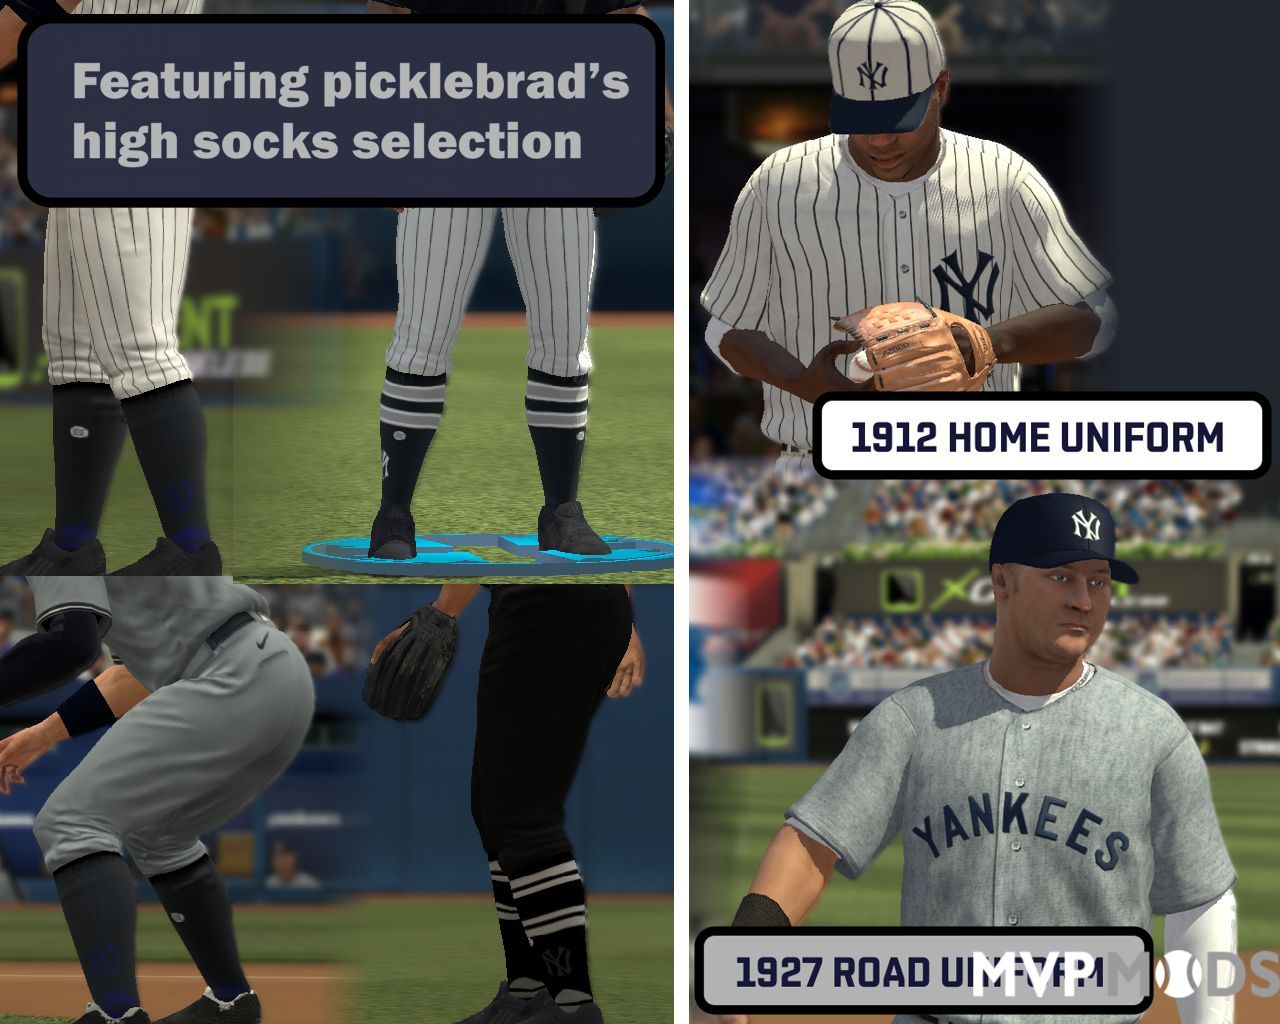 2020-2022 New York Yankees Uniform Set - Uniforms - MVP Mods